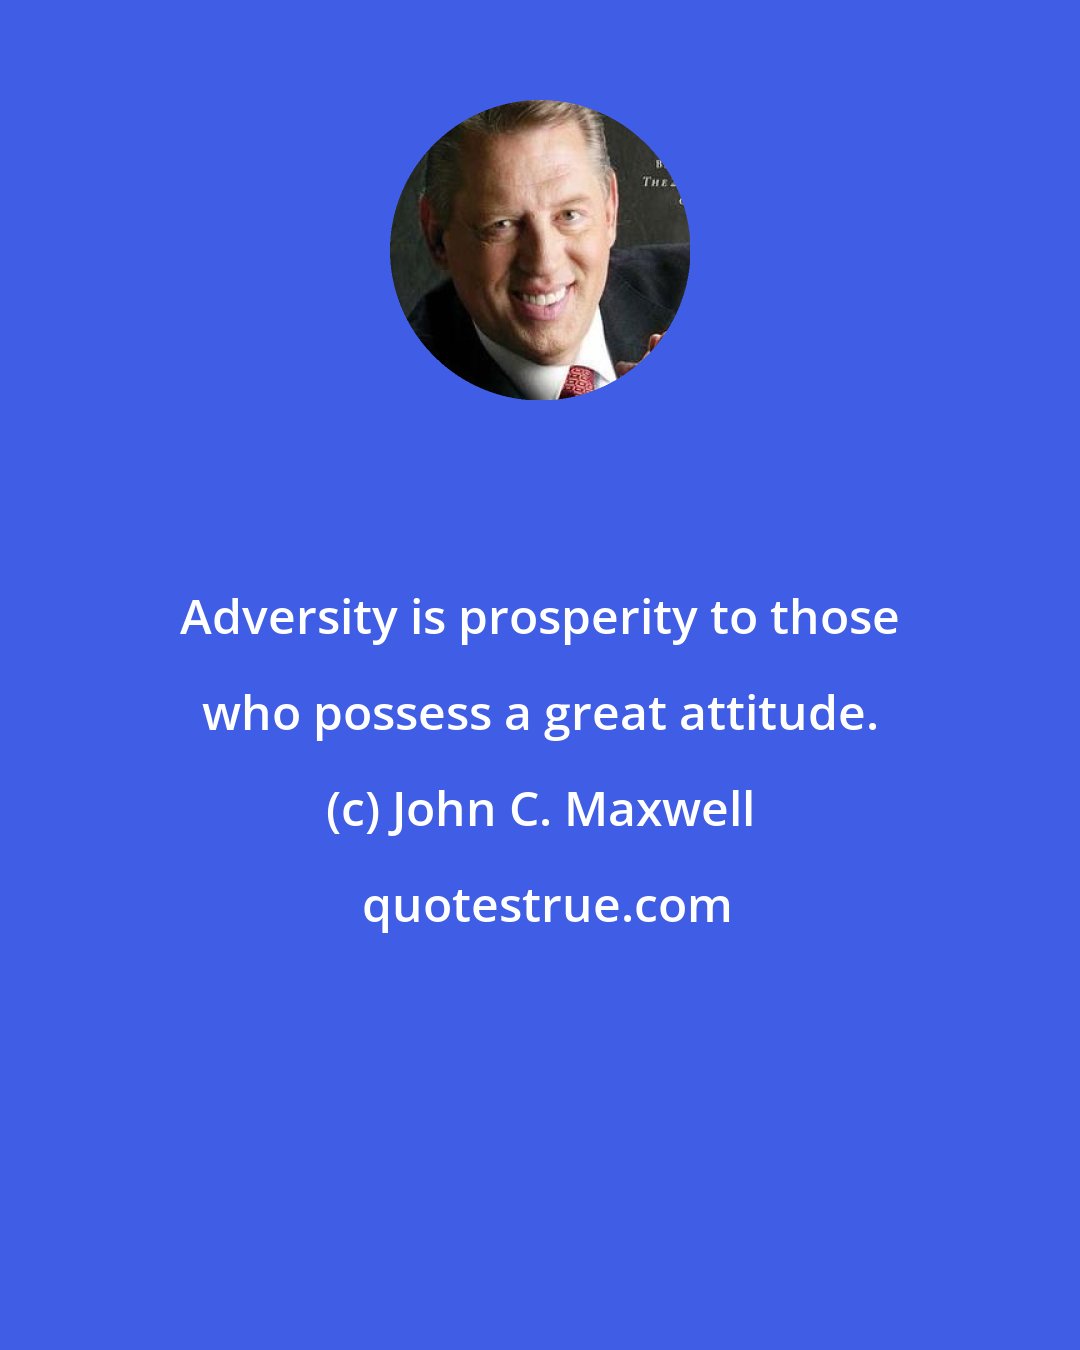 John C. Maxwell: Adversity is prosperity to those who possess a great attitude.